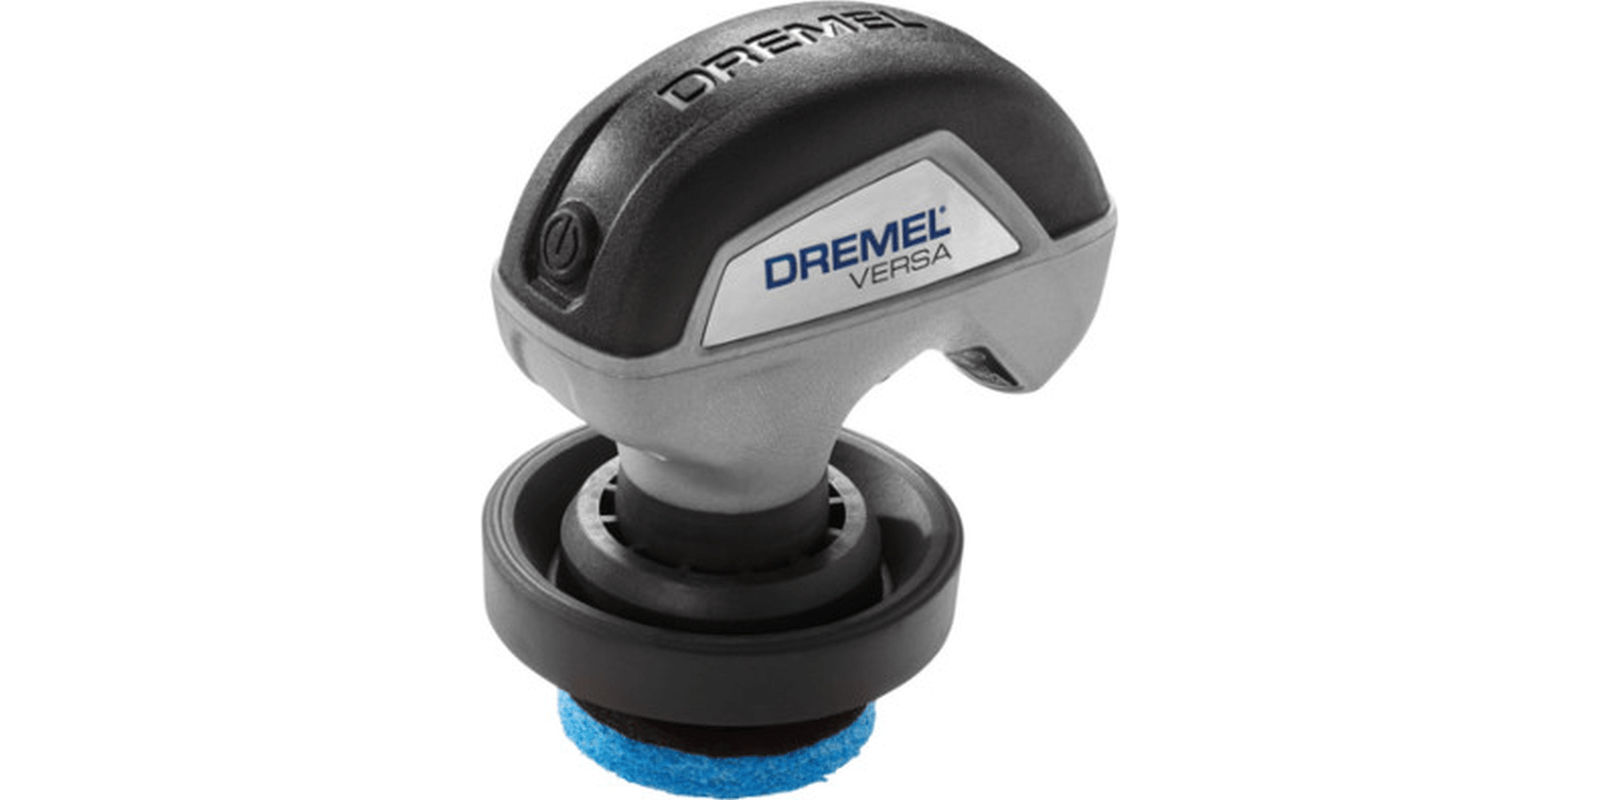 Dremel Versa Cordless Power Scrubber 19Pc Set w/Pads, Brushes USB